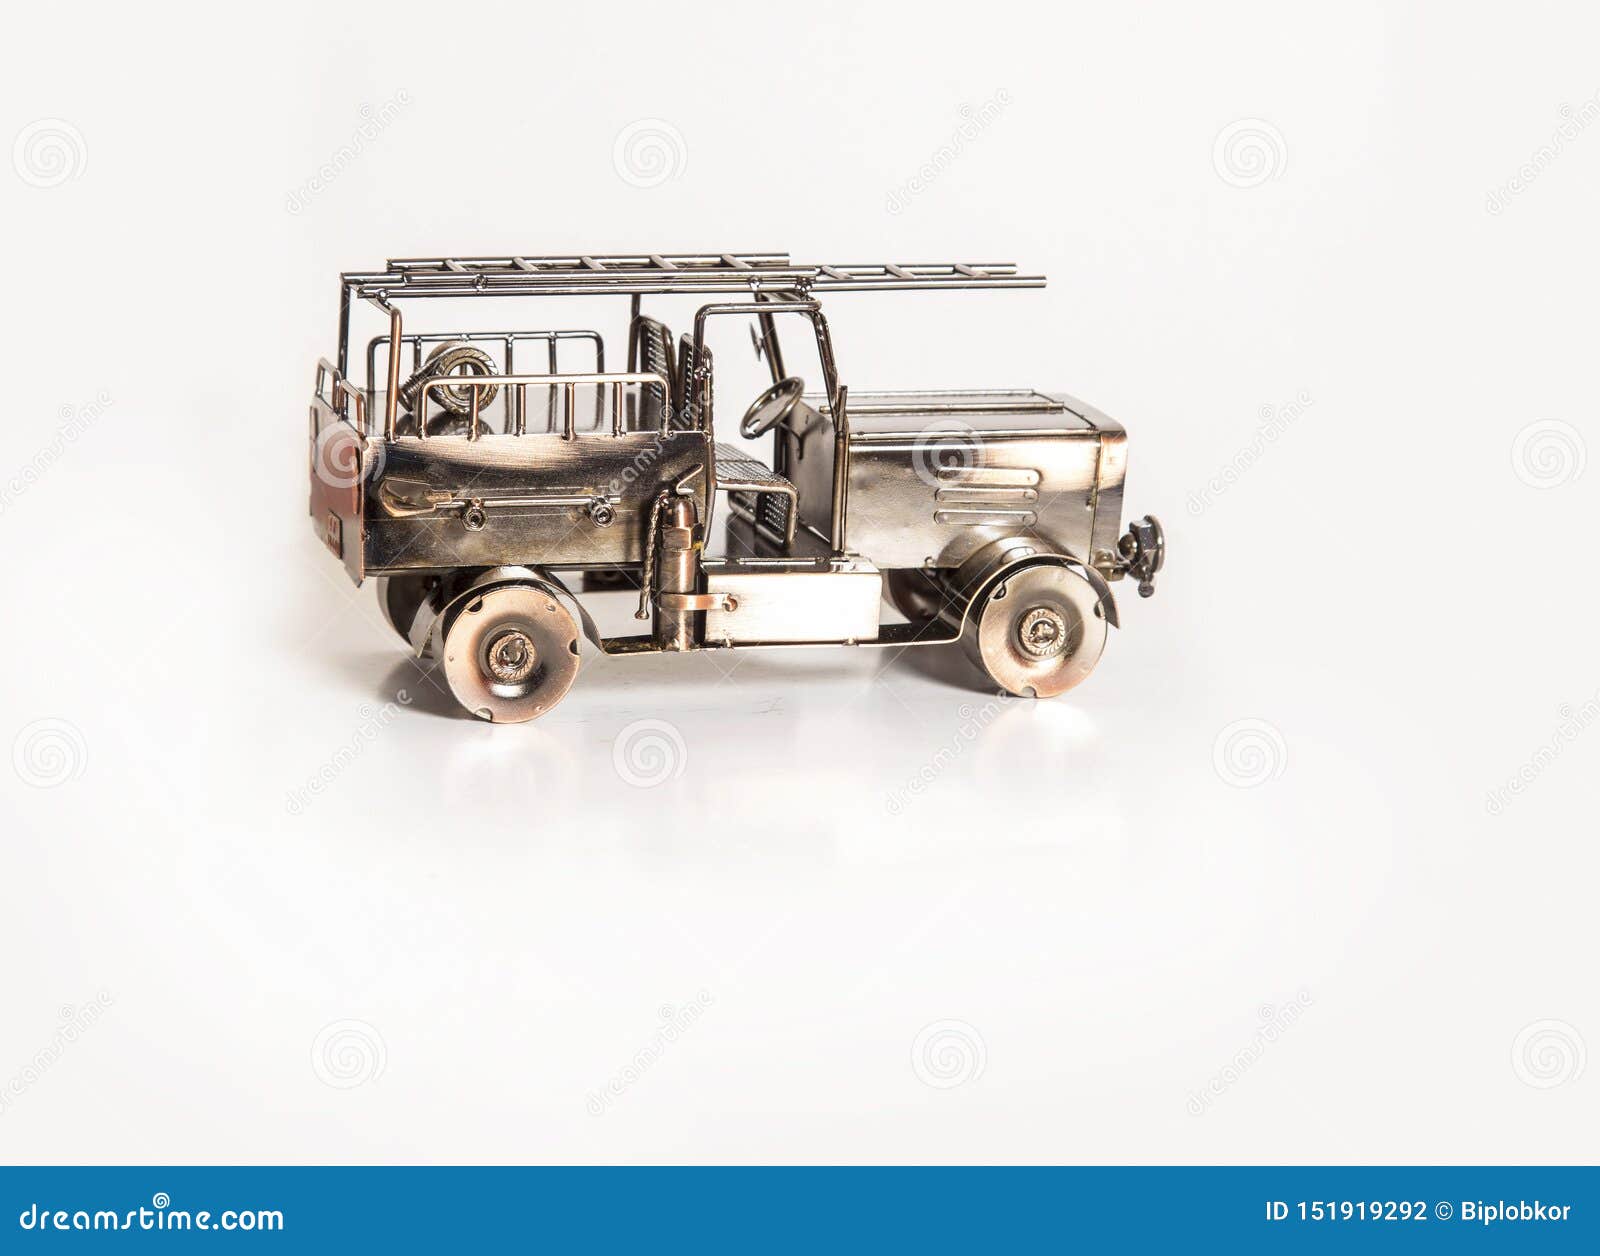 Details about   Vintage Jeep Antique Style Handmade Metal Car Kid Toy Model Showpiece Home Decor 